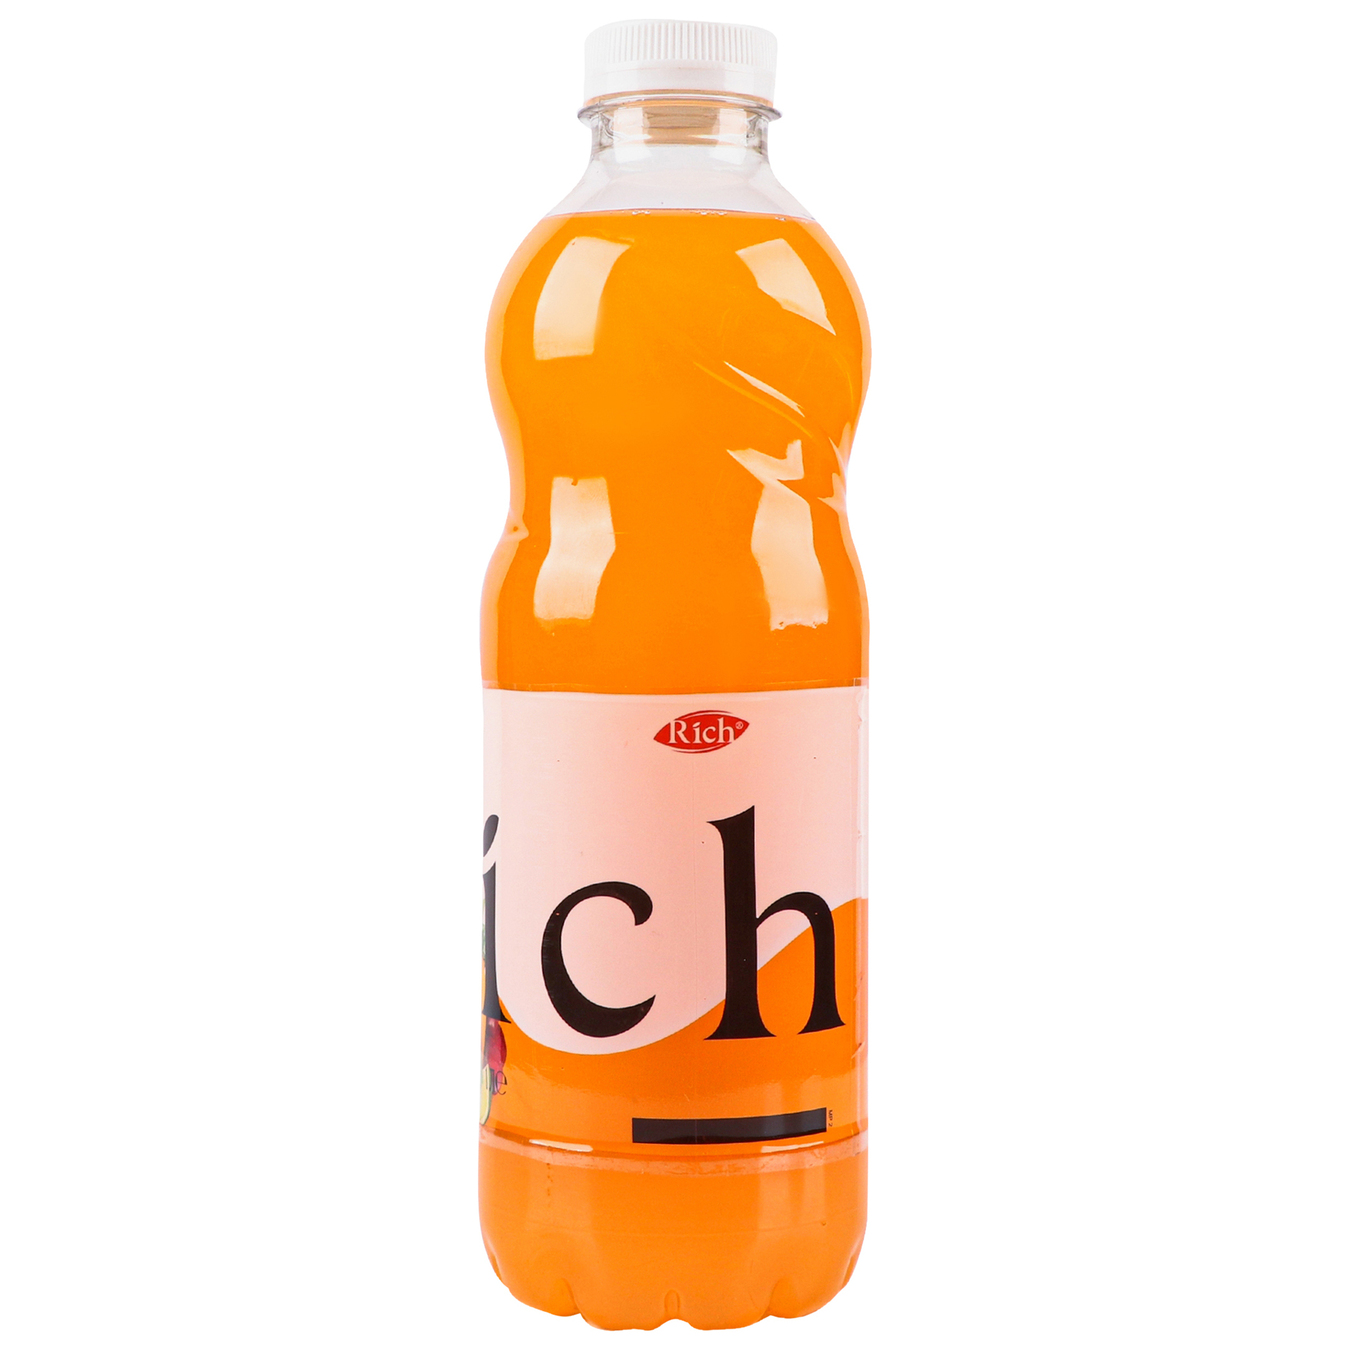 Juice drink Rich multifruit 1 liter 2